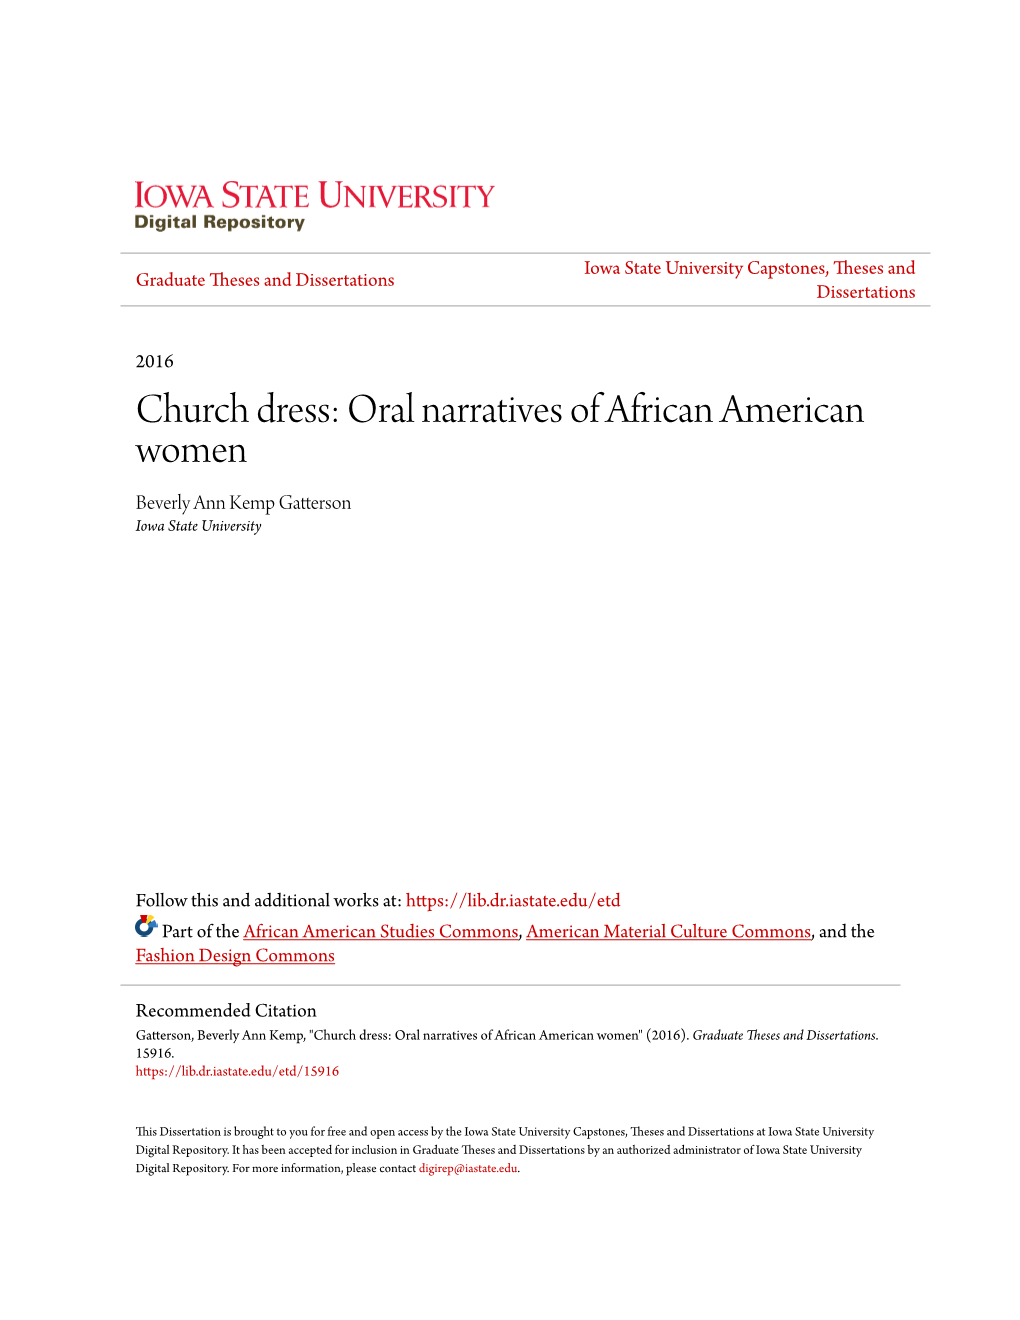 Church Dress: Oral Narratives of African American Women Beverly Ann Kemp Gatterson Iowa State University